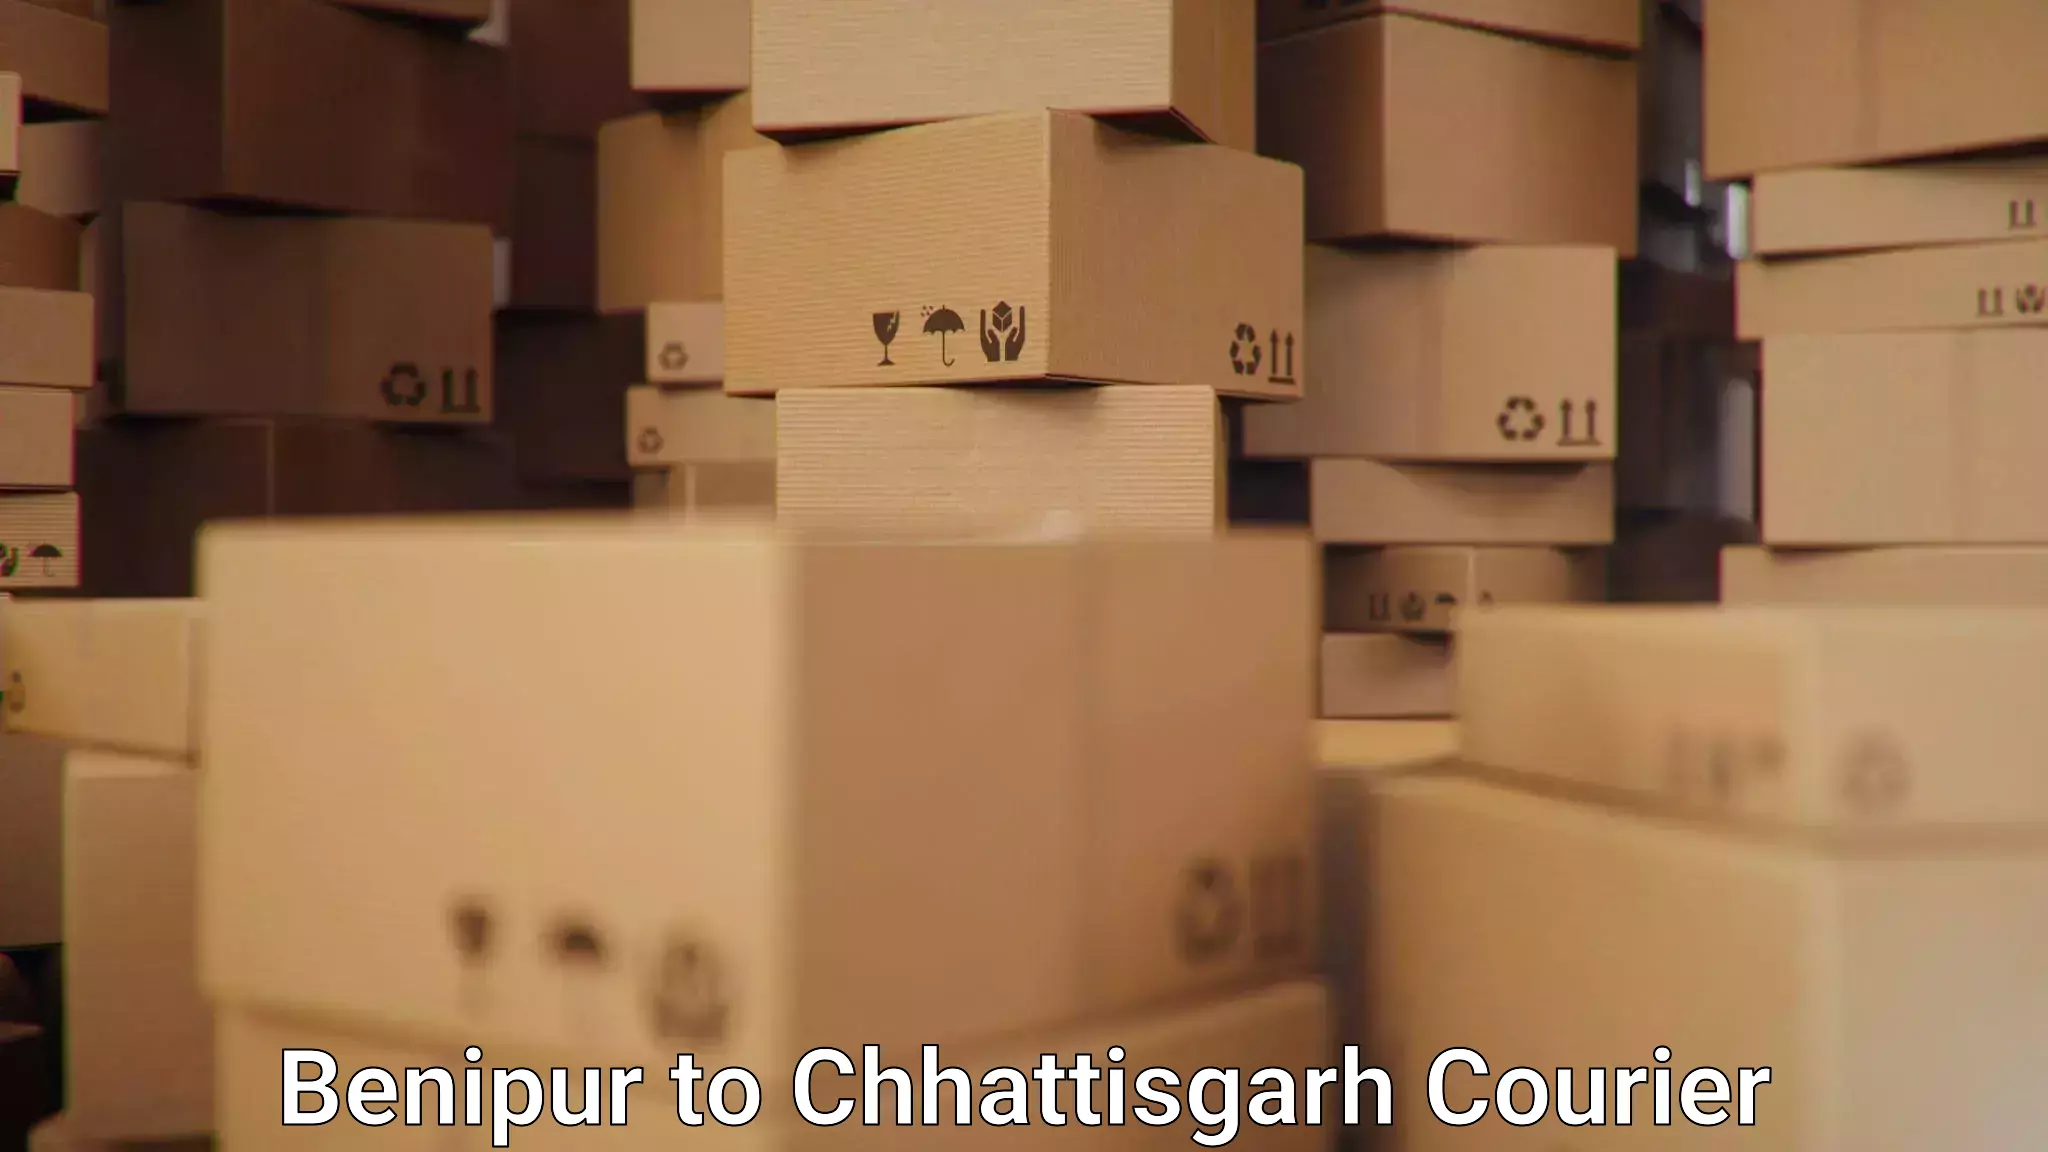 Personal courier services Benipur to Patna Chhattisgarh